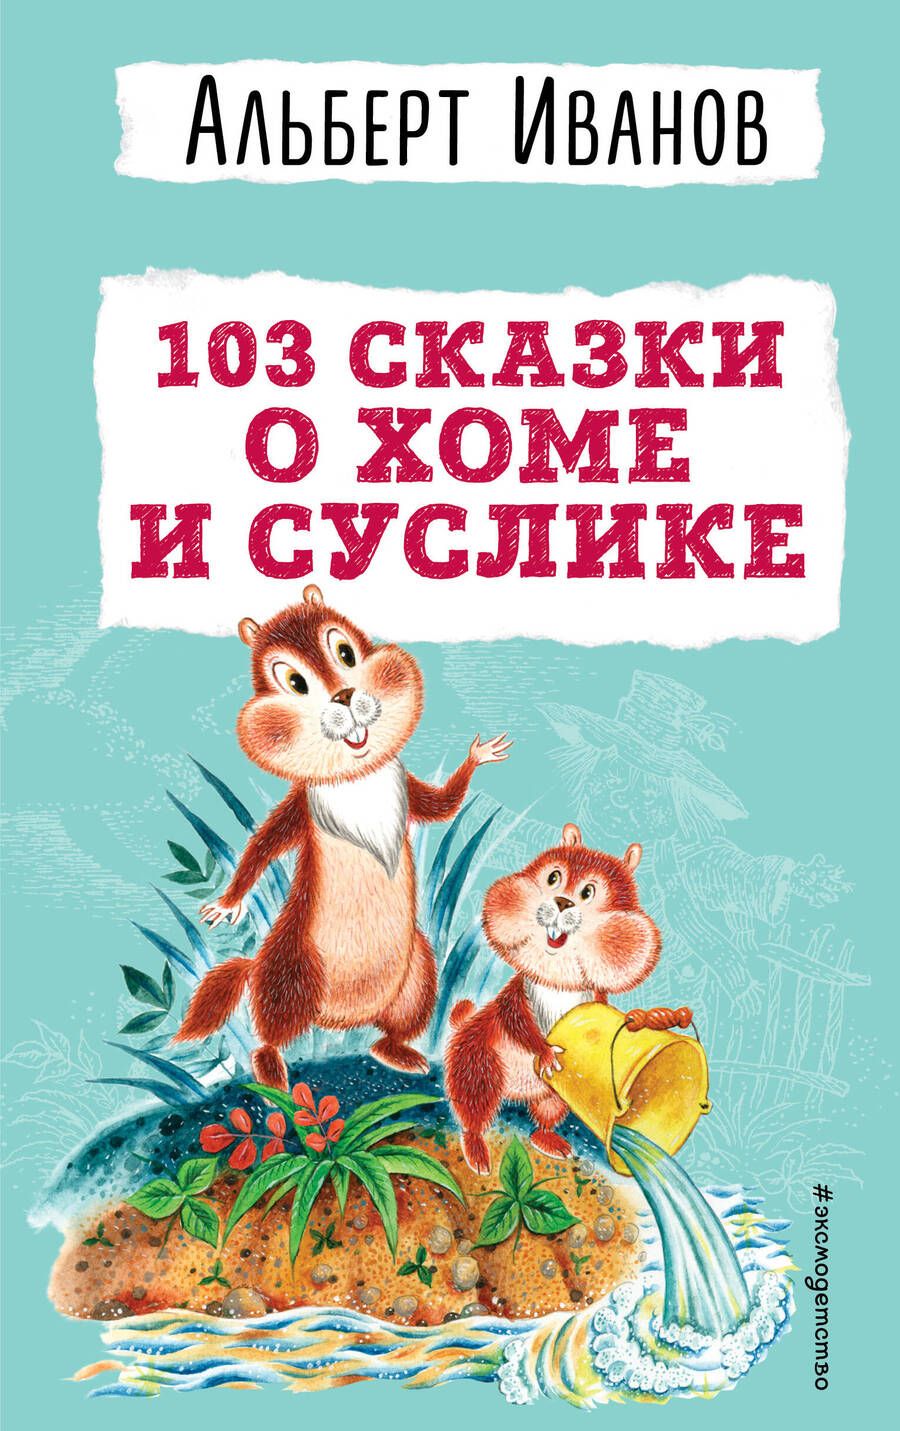 Обложка книги "Иванов: 103 сказки о Хоме и Суслике"